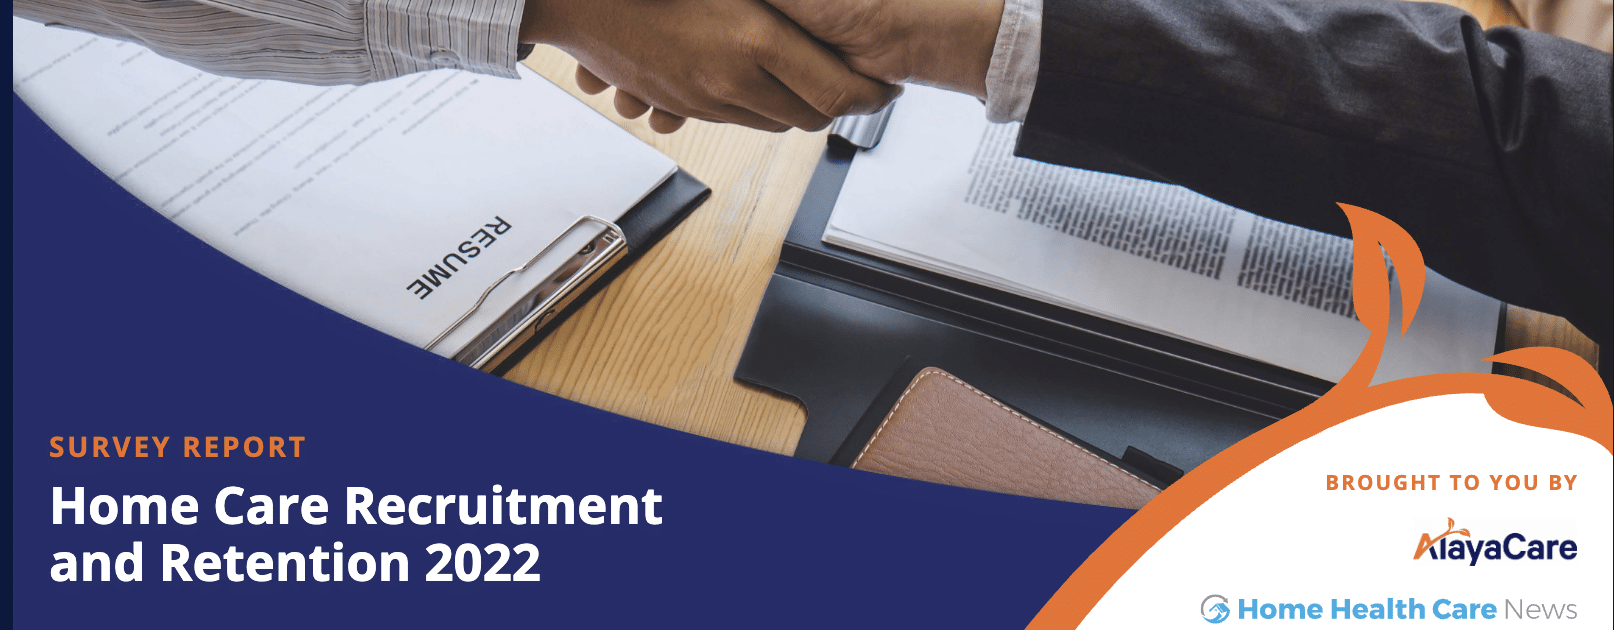 2022 Recruitment and Retention Survey Report